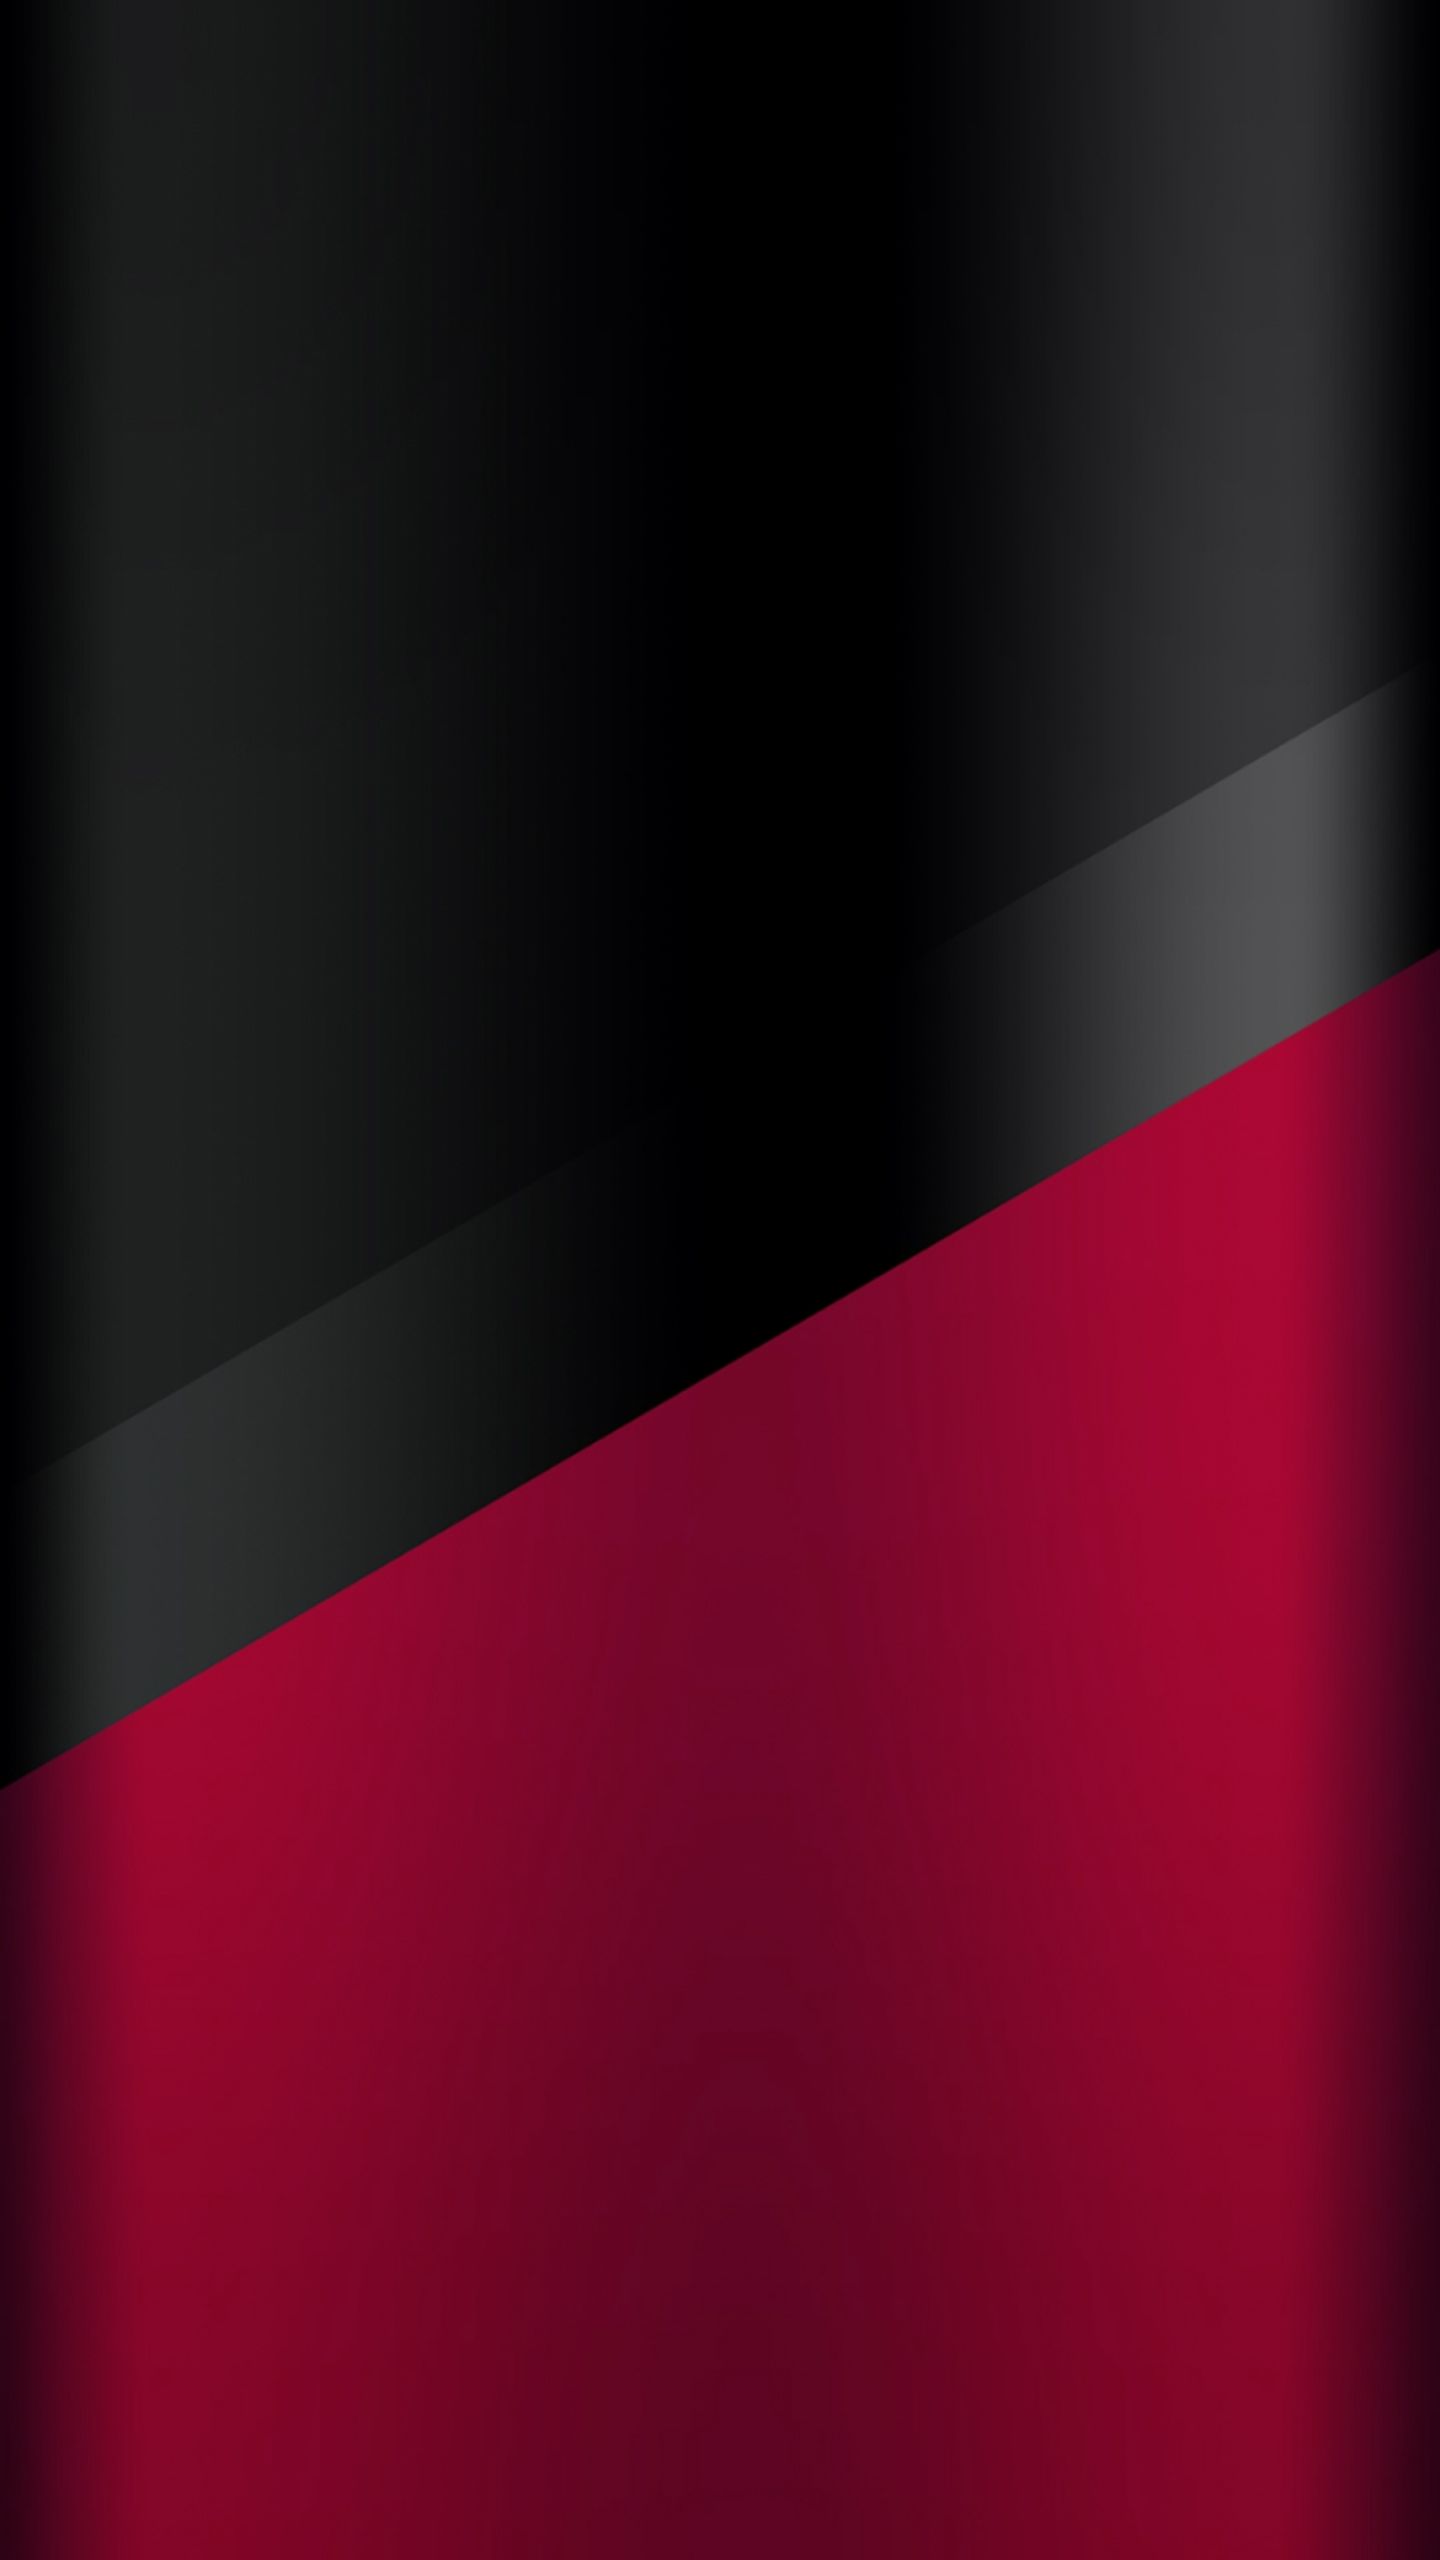 Dark S7 Edge Wallpaper 03 and Red. Samsung galaxy